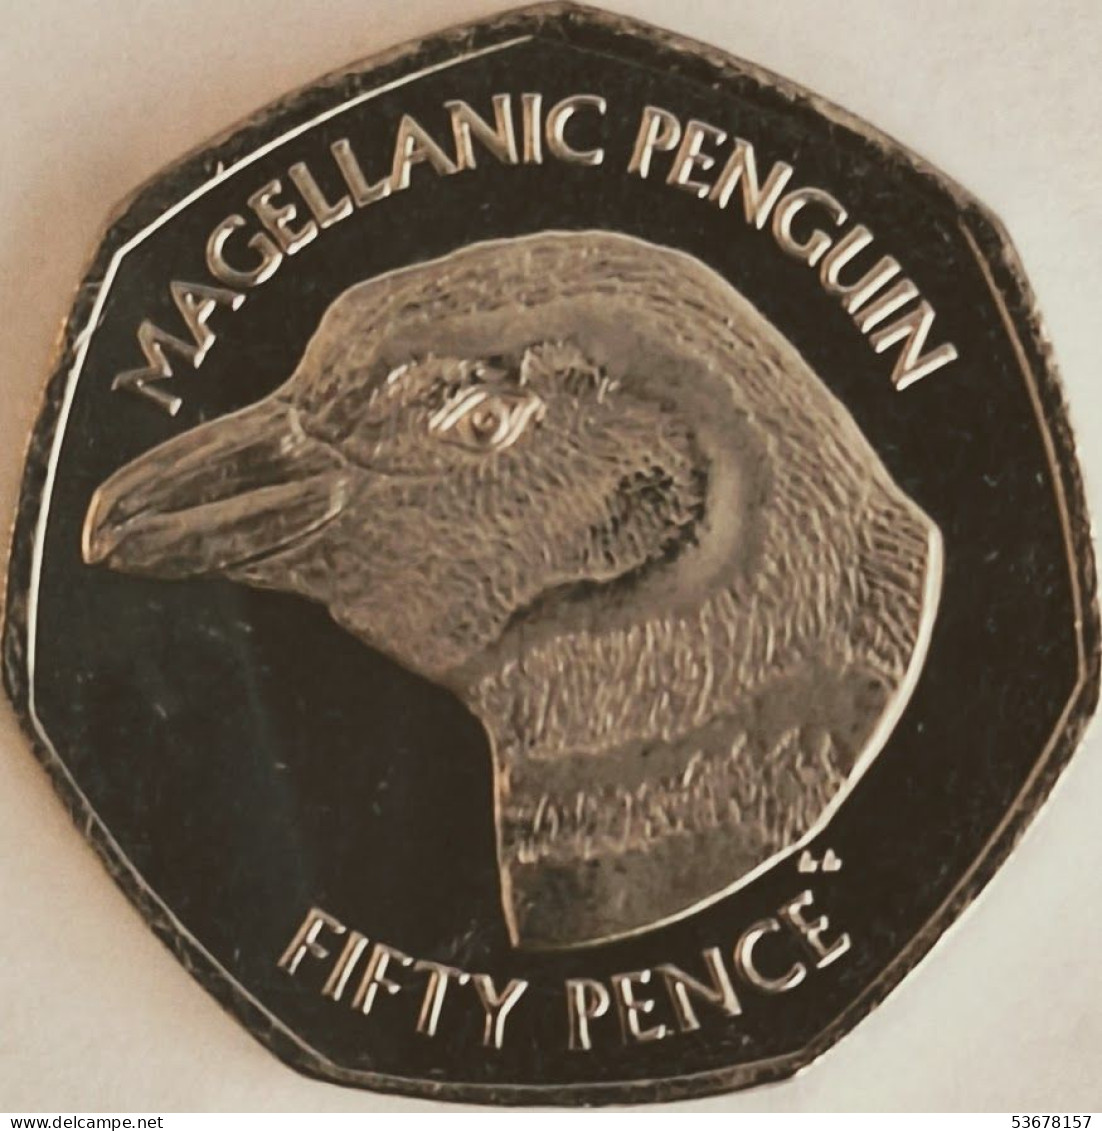 Falkland Islands - 50 Pence 2021AA, Magellanic Penguin, UC# 119 (#3871) - Falklandeilanden